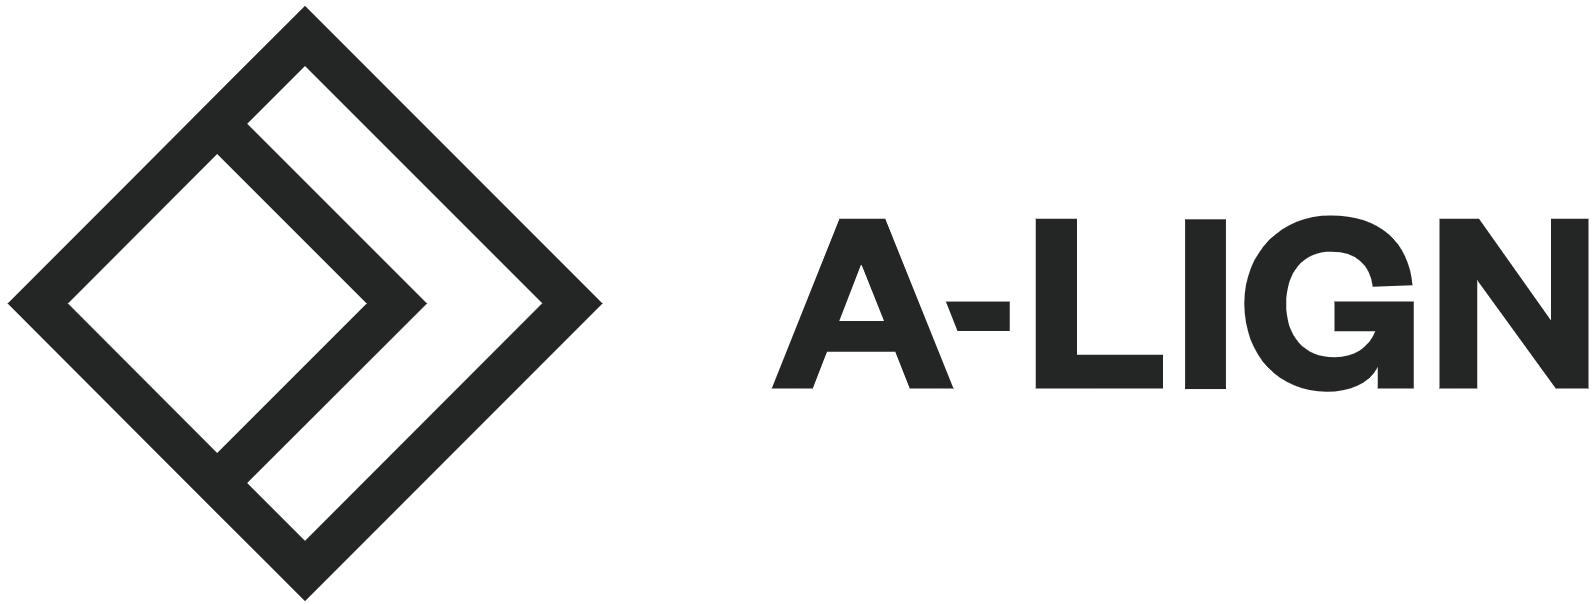 A-LIGN logo